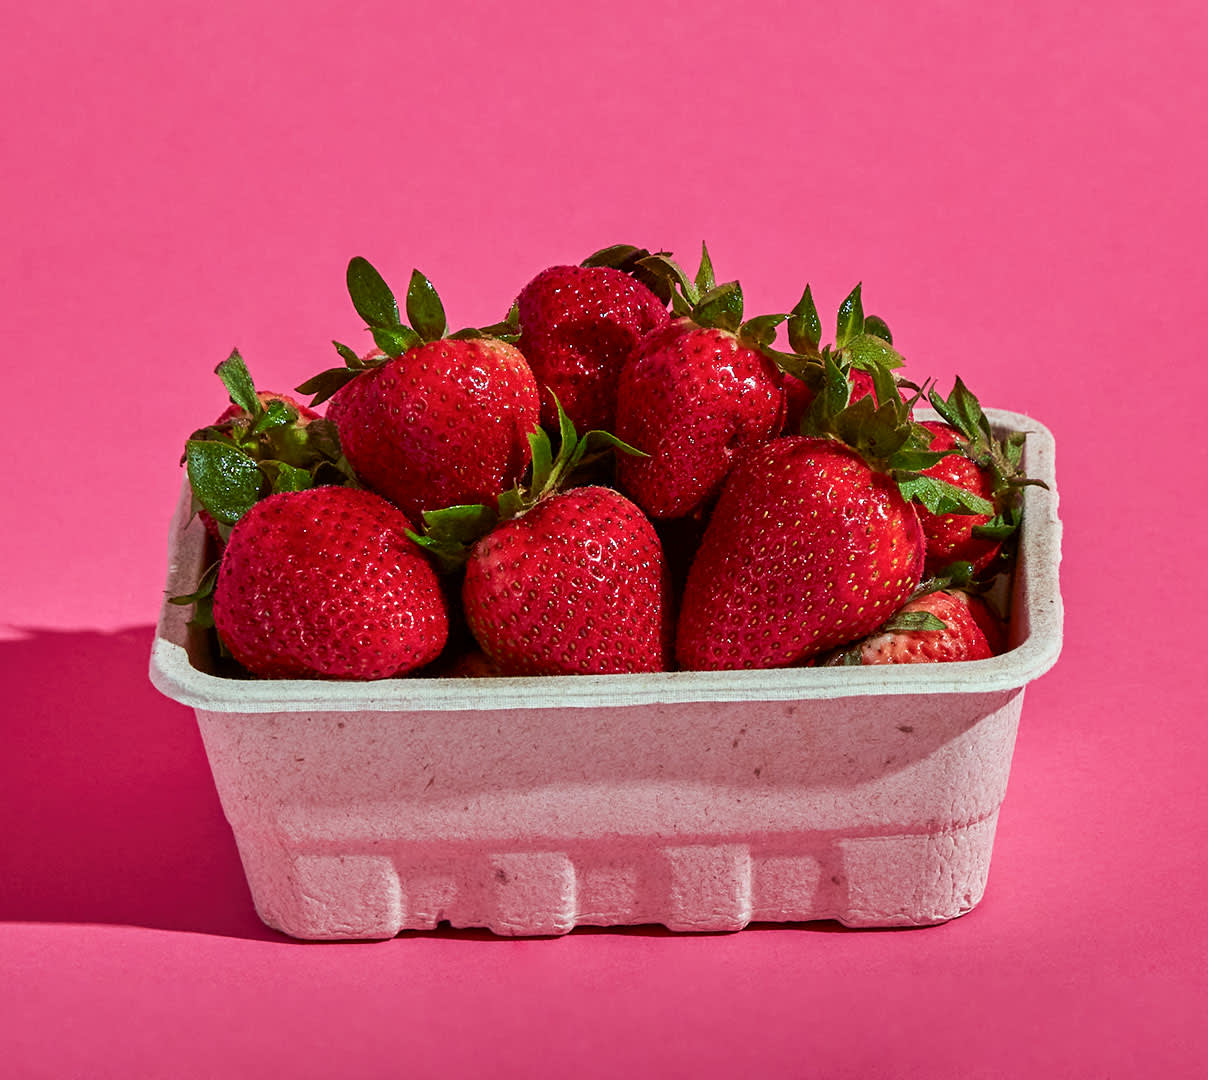 Cx Blog: Strawberries 